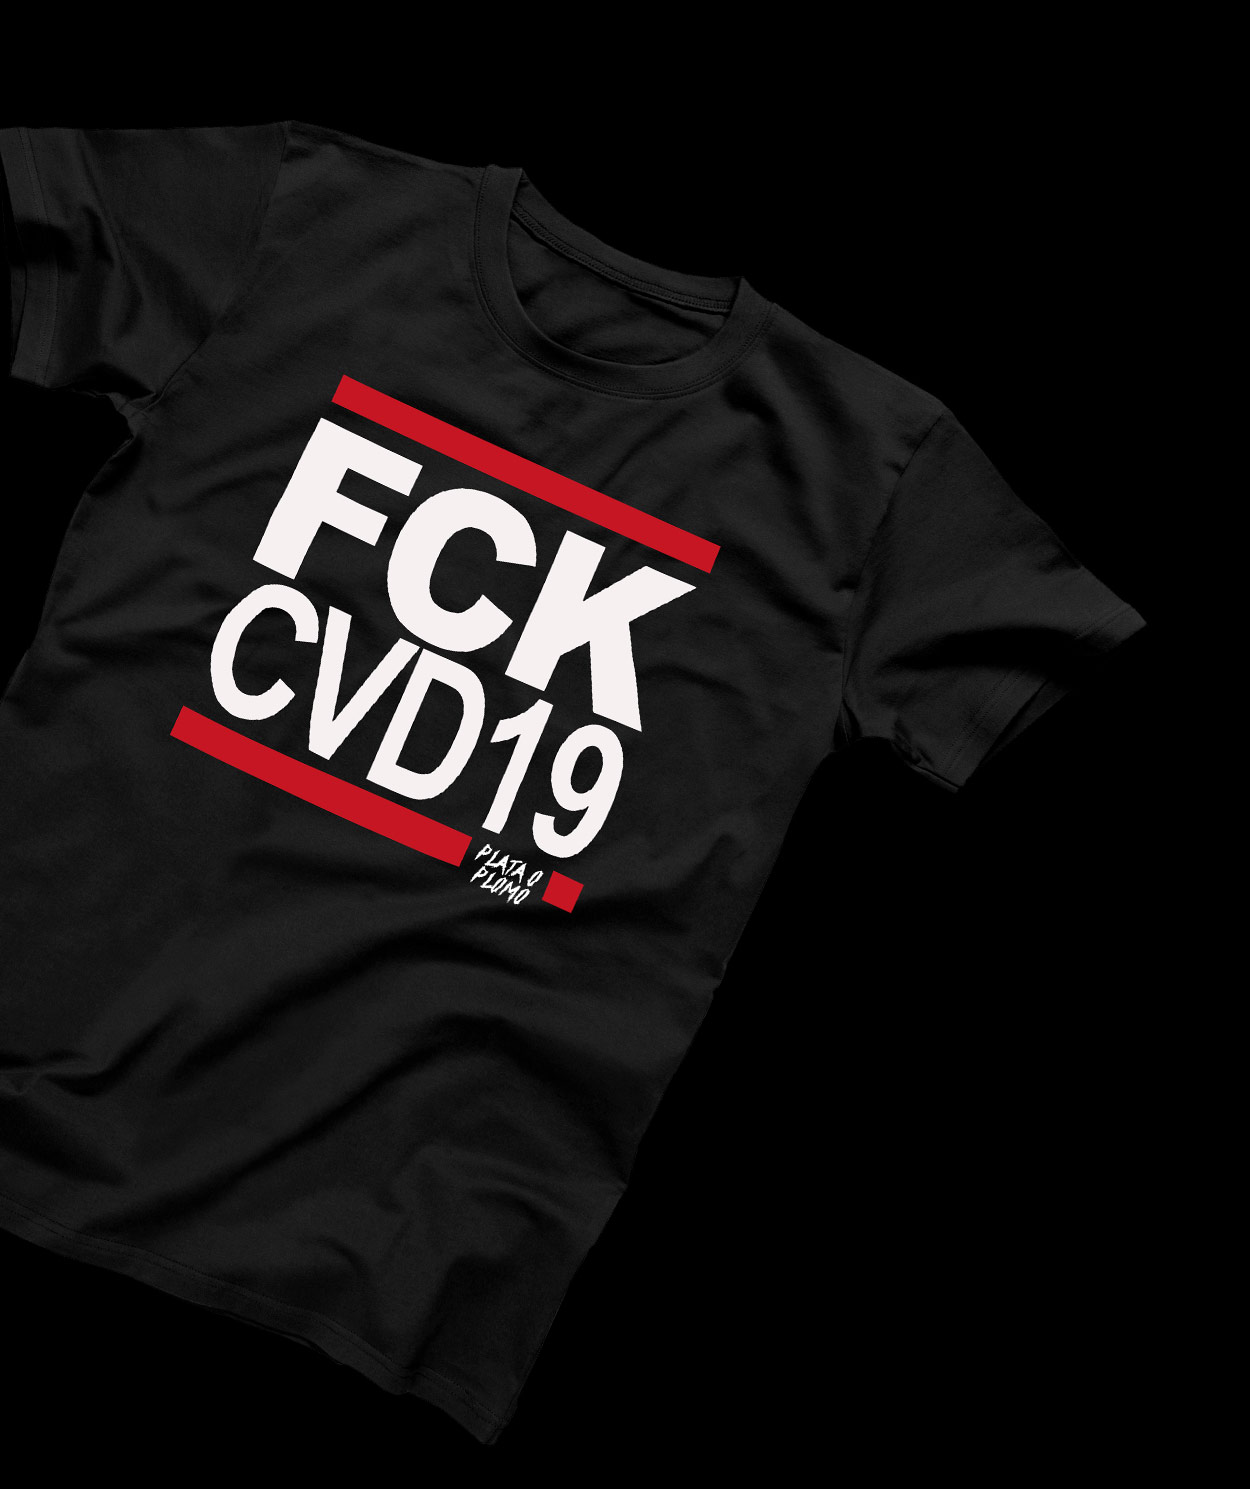 Camiseta FCK CVD19